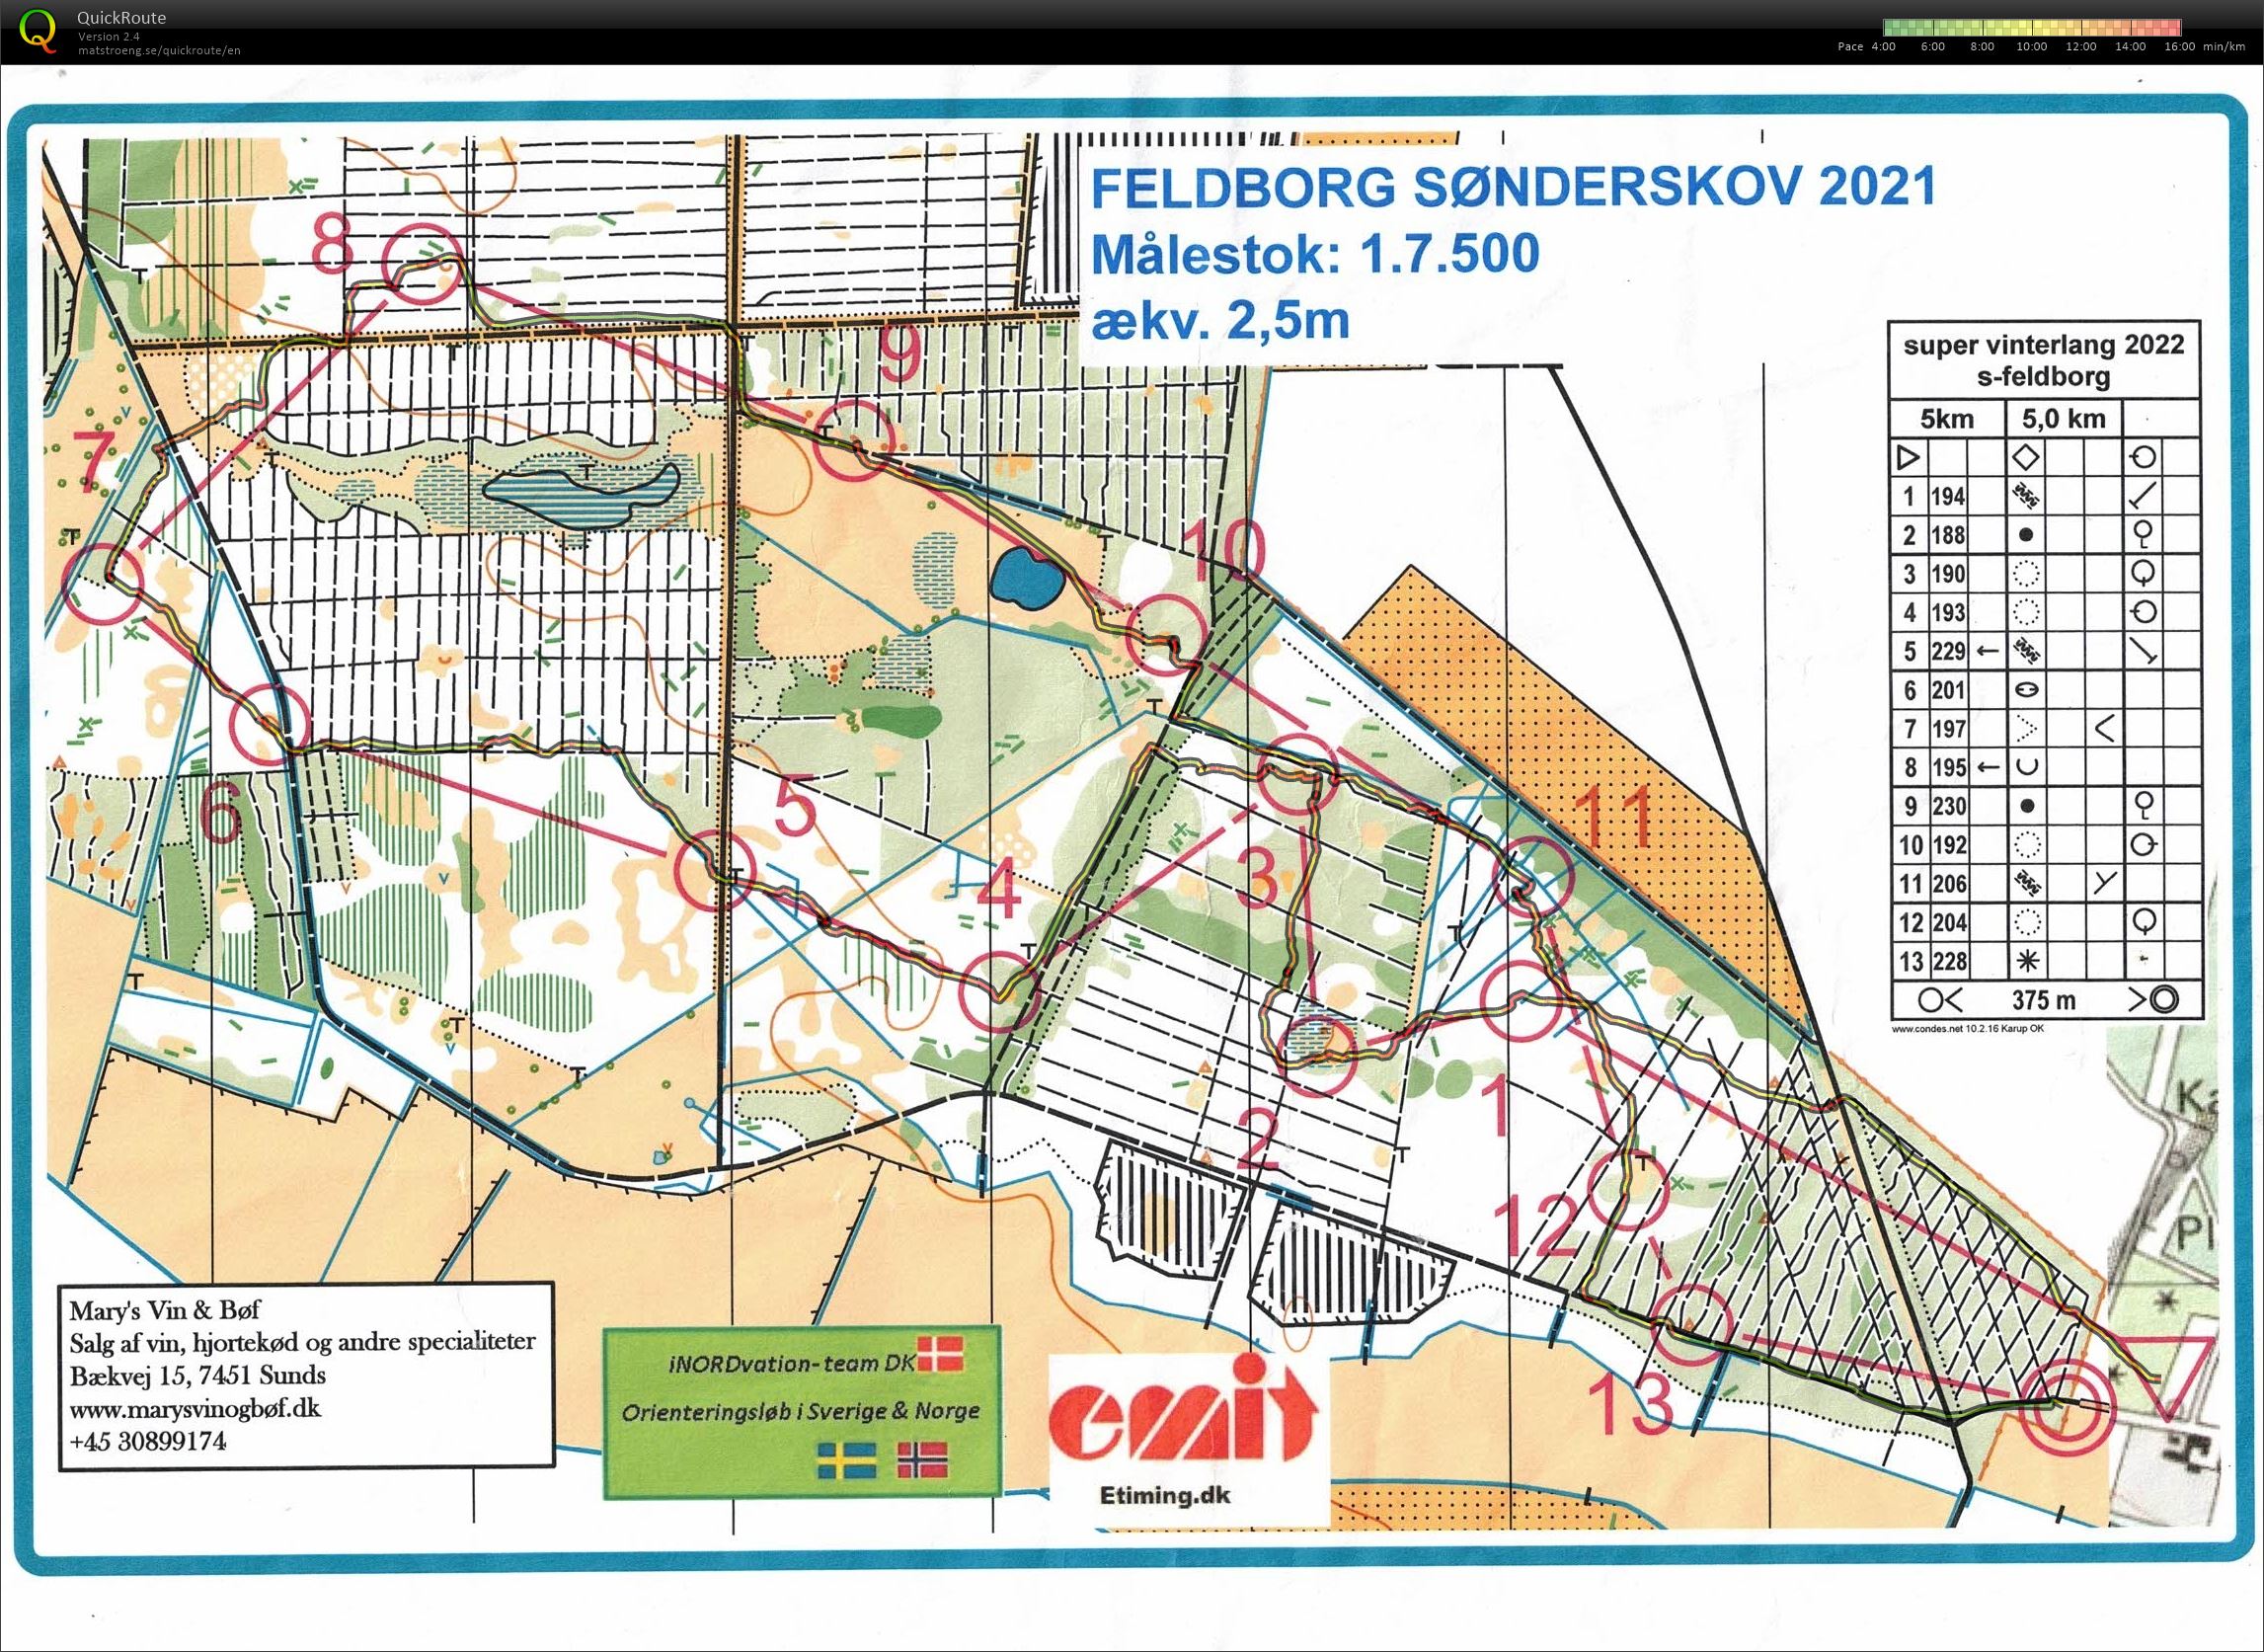 Feldborg Sønderskov, Super Langdistance 2, Bane 5 km, Pia Gade, 020122 (2022-01-02)